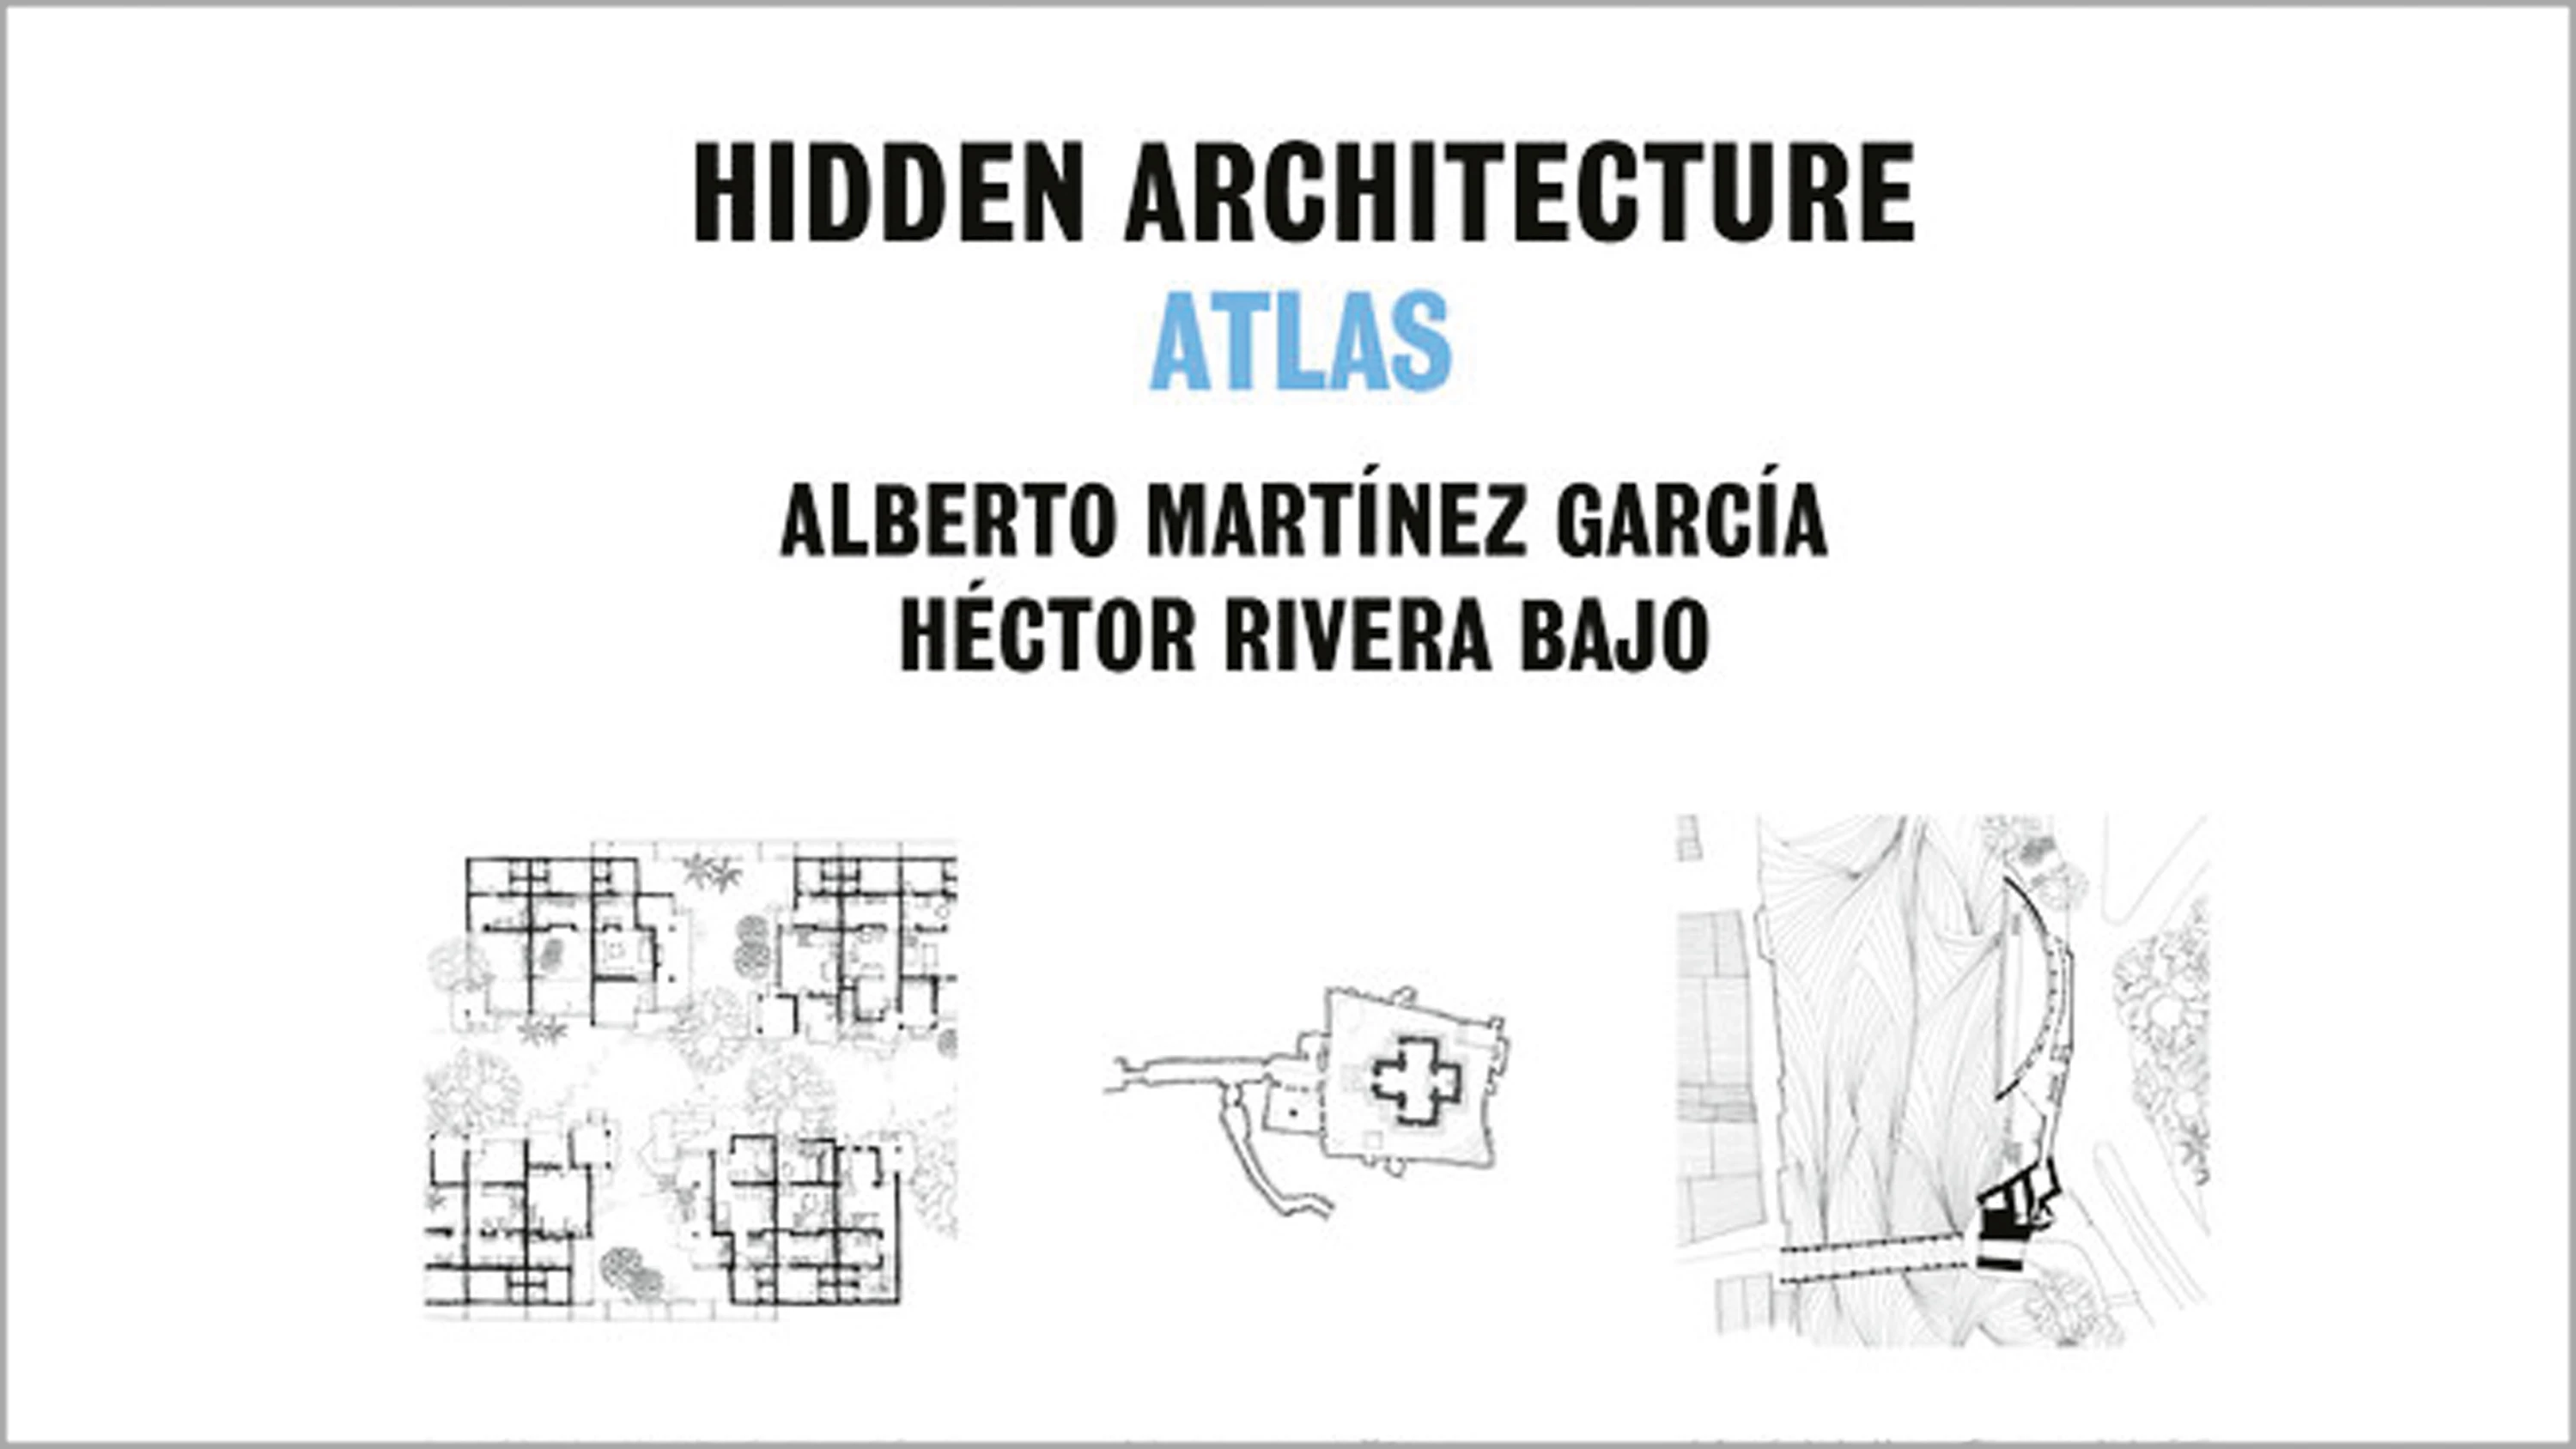 The Atlas of Hidden Architecture